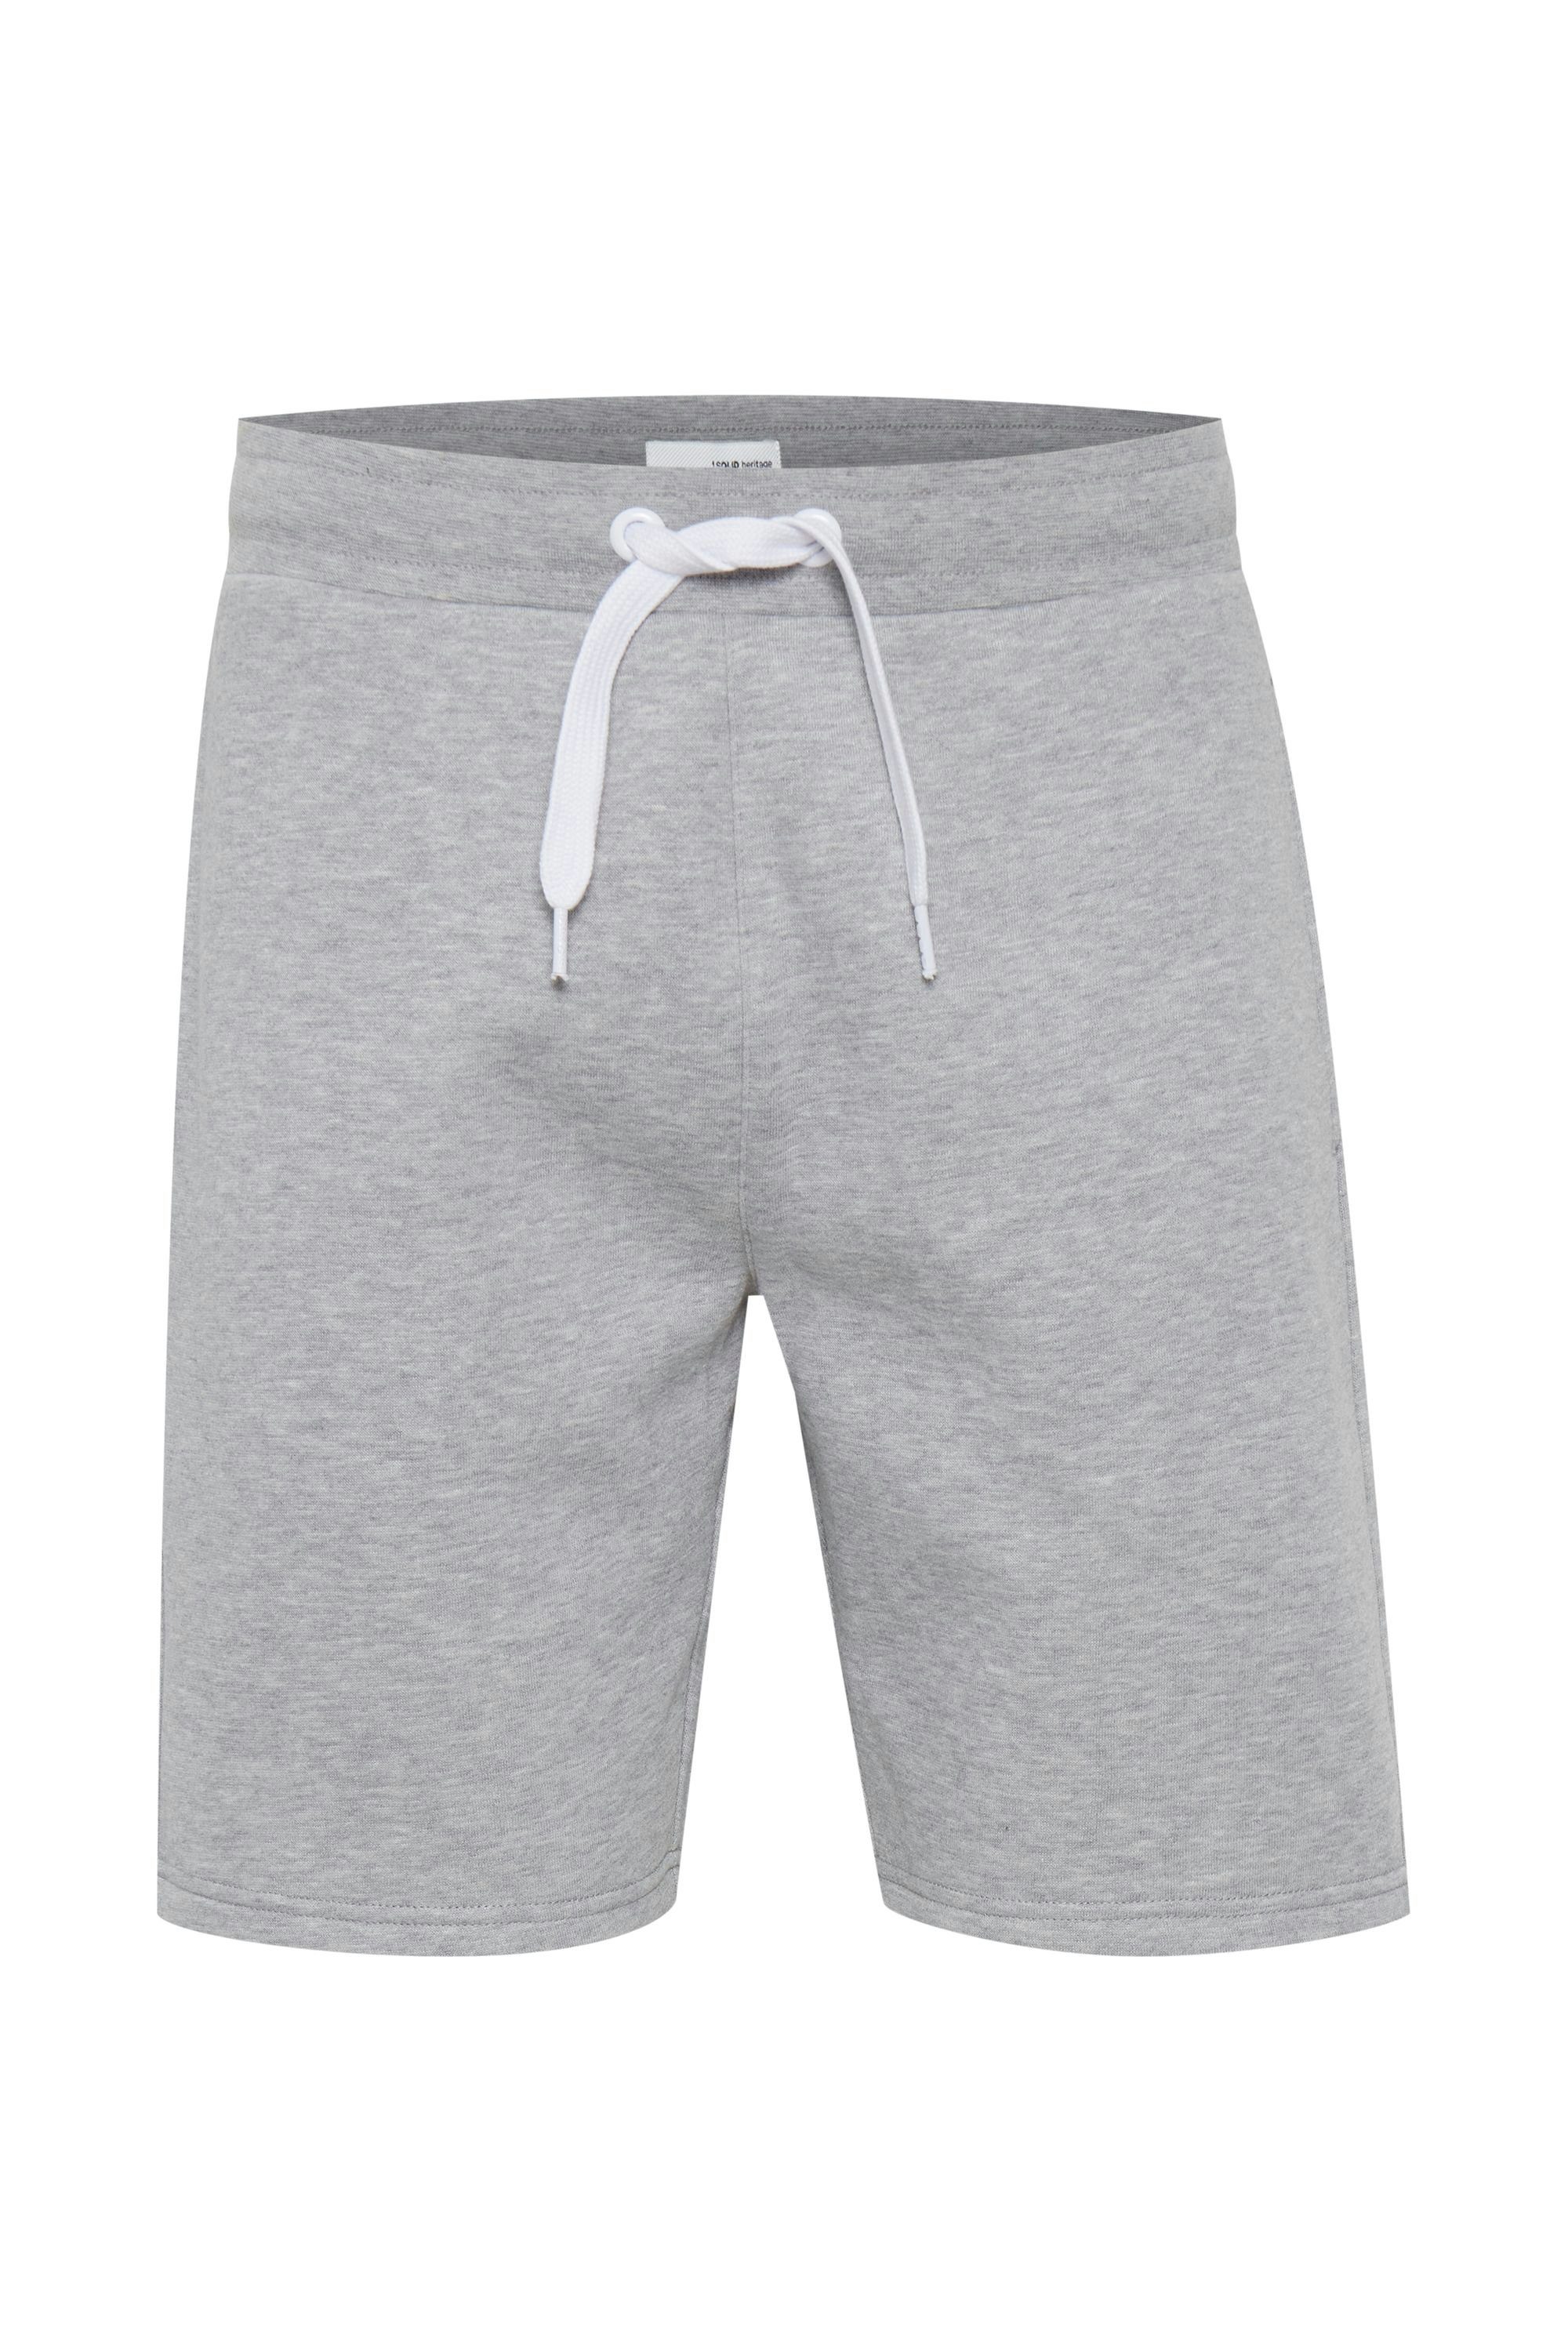 Sweat Melange Grey Shorts Light (1541011) mit Sweatshorts SDOliver Kordeln !Solid Basic